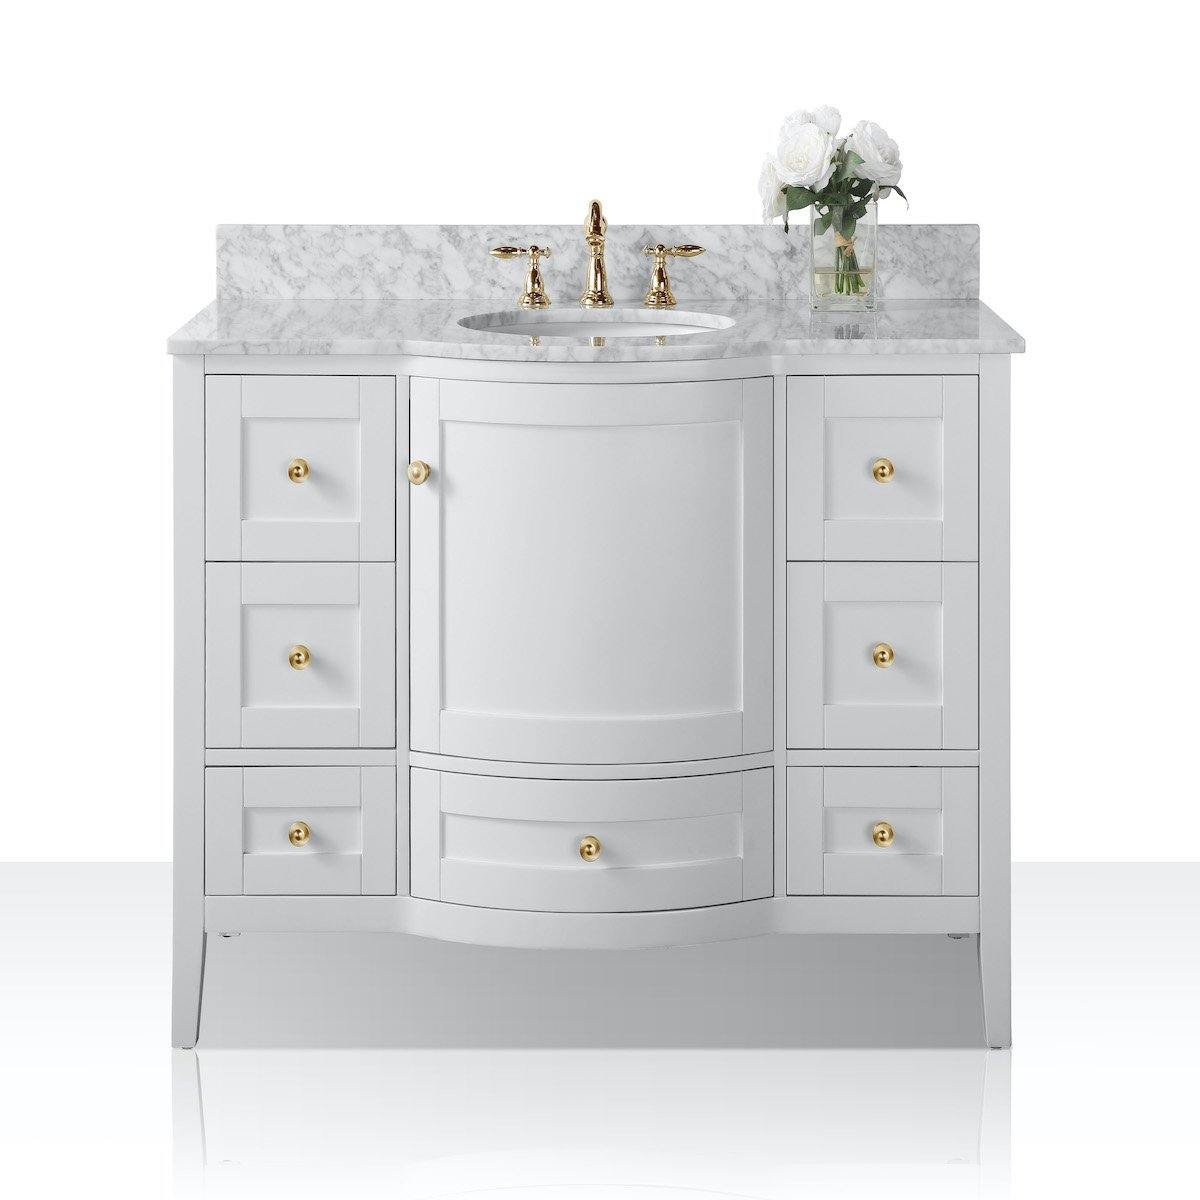 Ancerre Designs Lauren 48 Inch White Single Vanity with Gold Hardware #hardware_gold